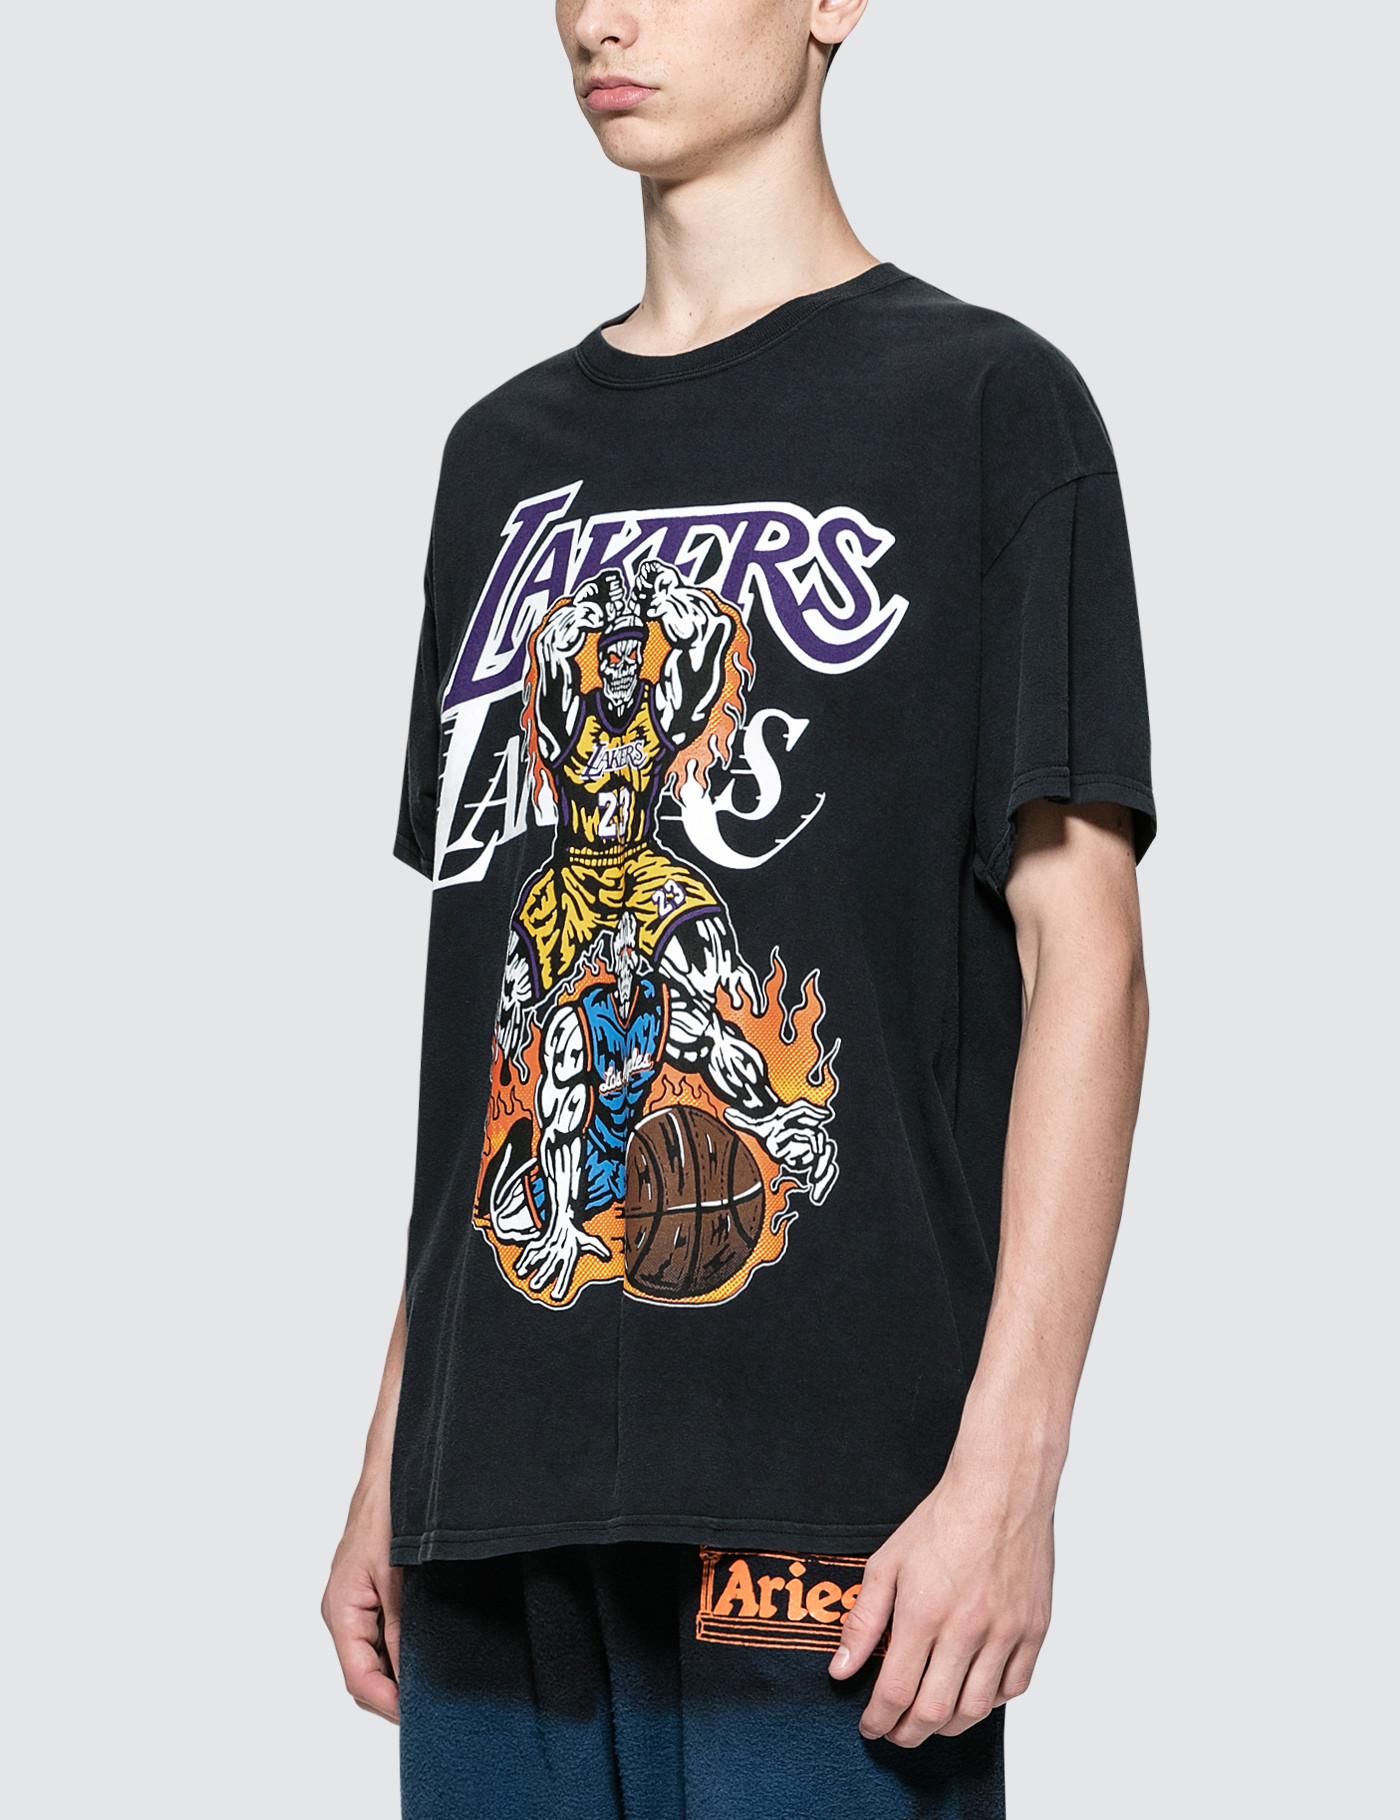 Warren Lotas Cotton Lakers Athletics T-shirt in Black for Men - Lyst